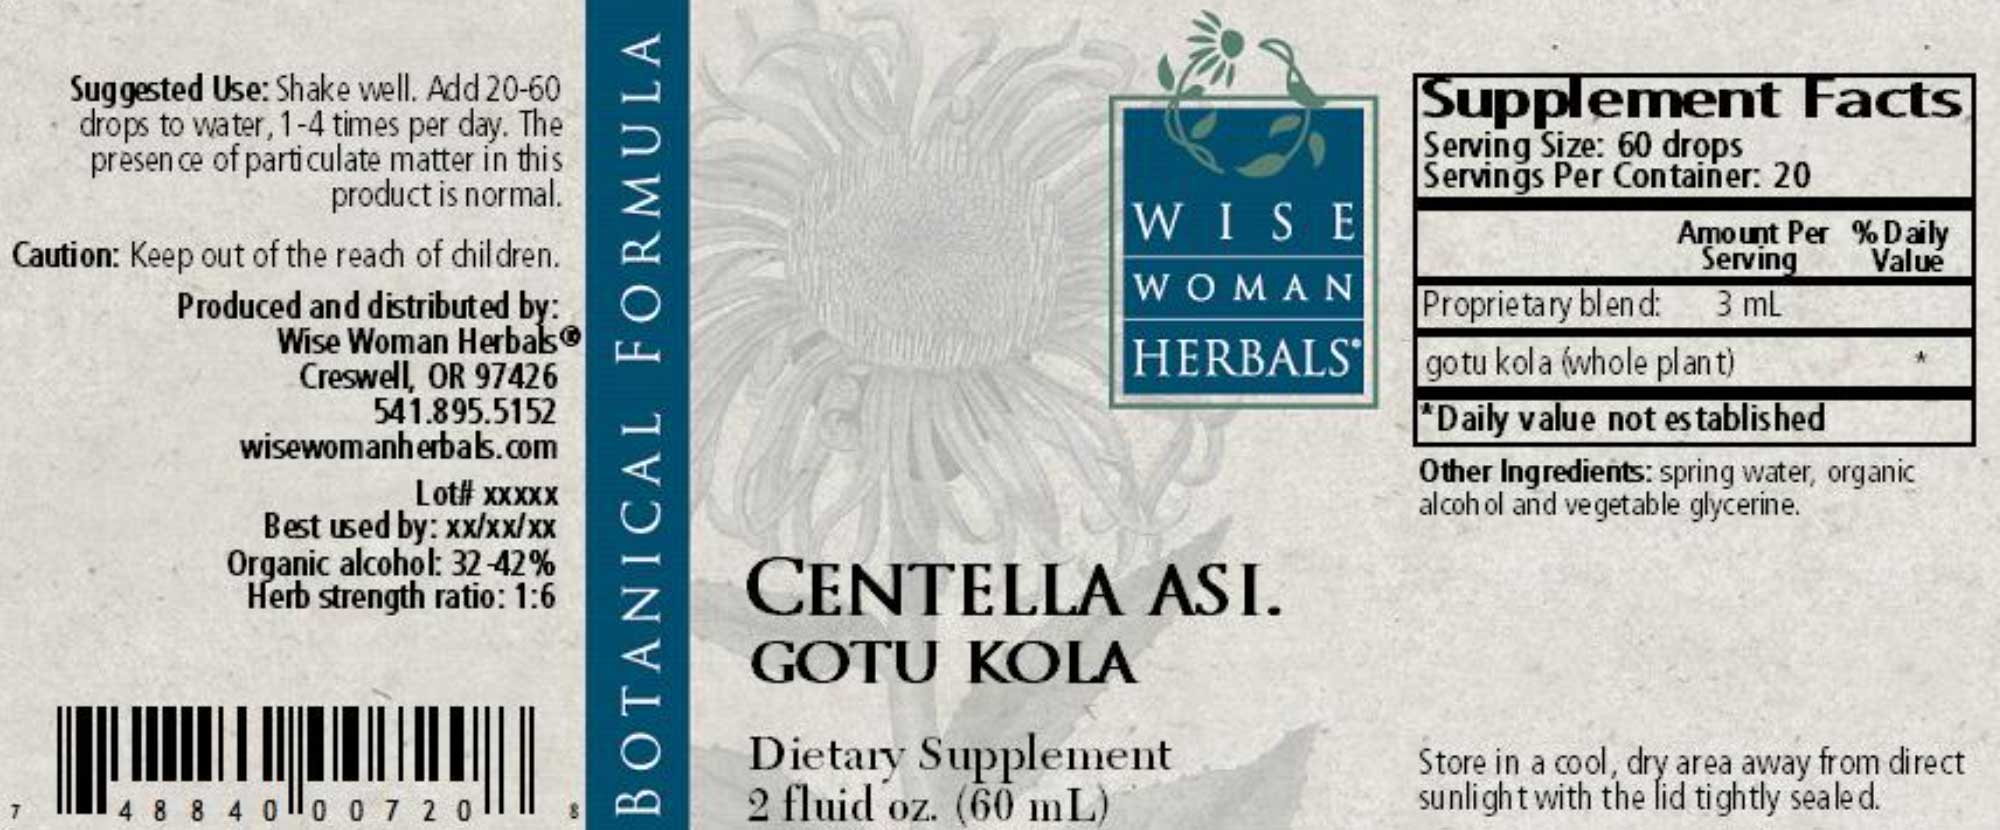 Wise Woman Herbals Centella Asiatica Gotu Kola Label